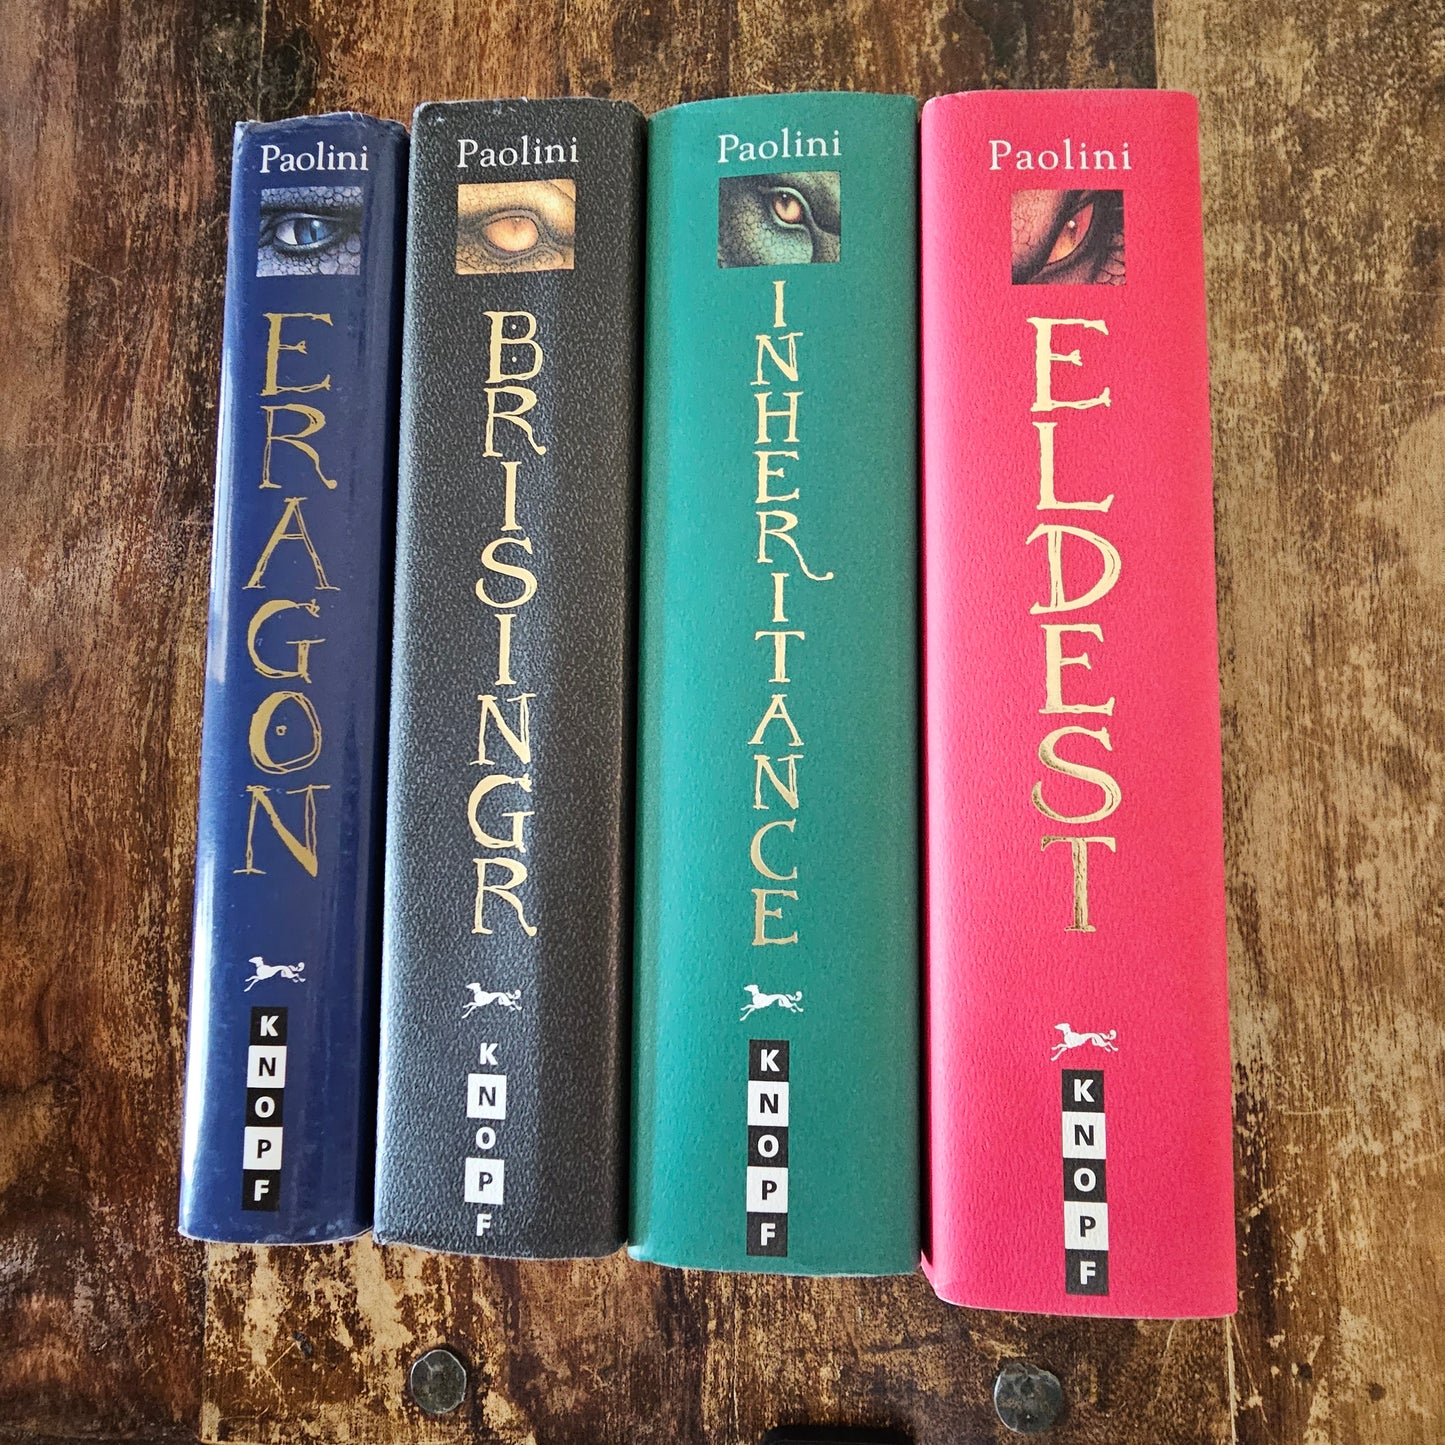 Eragon series